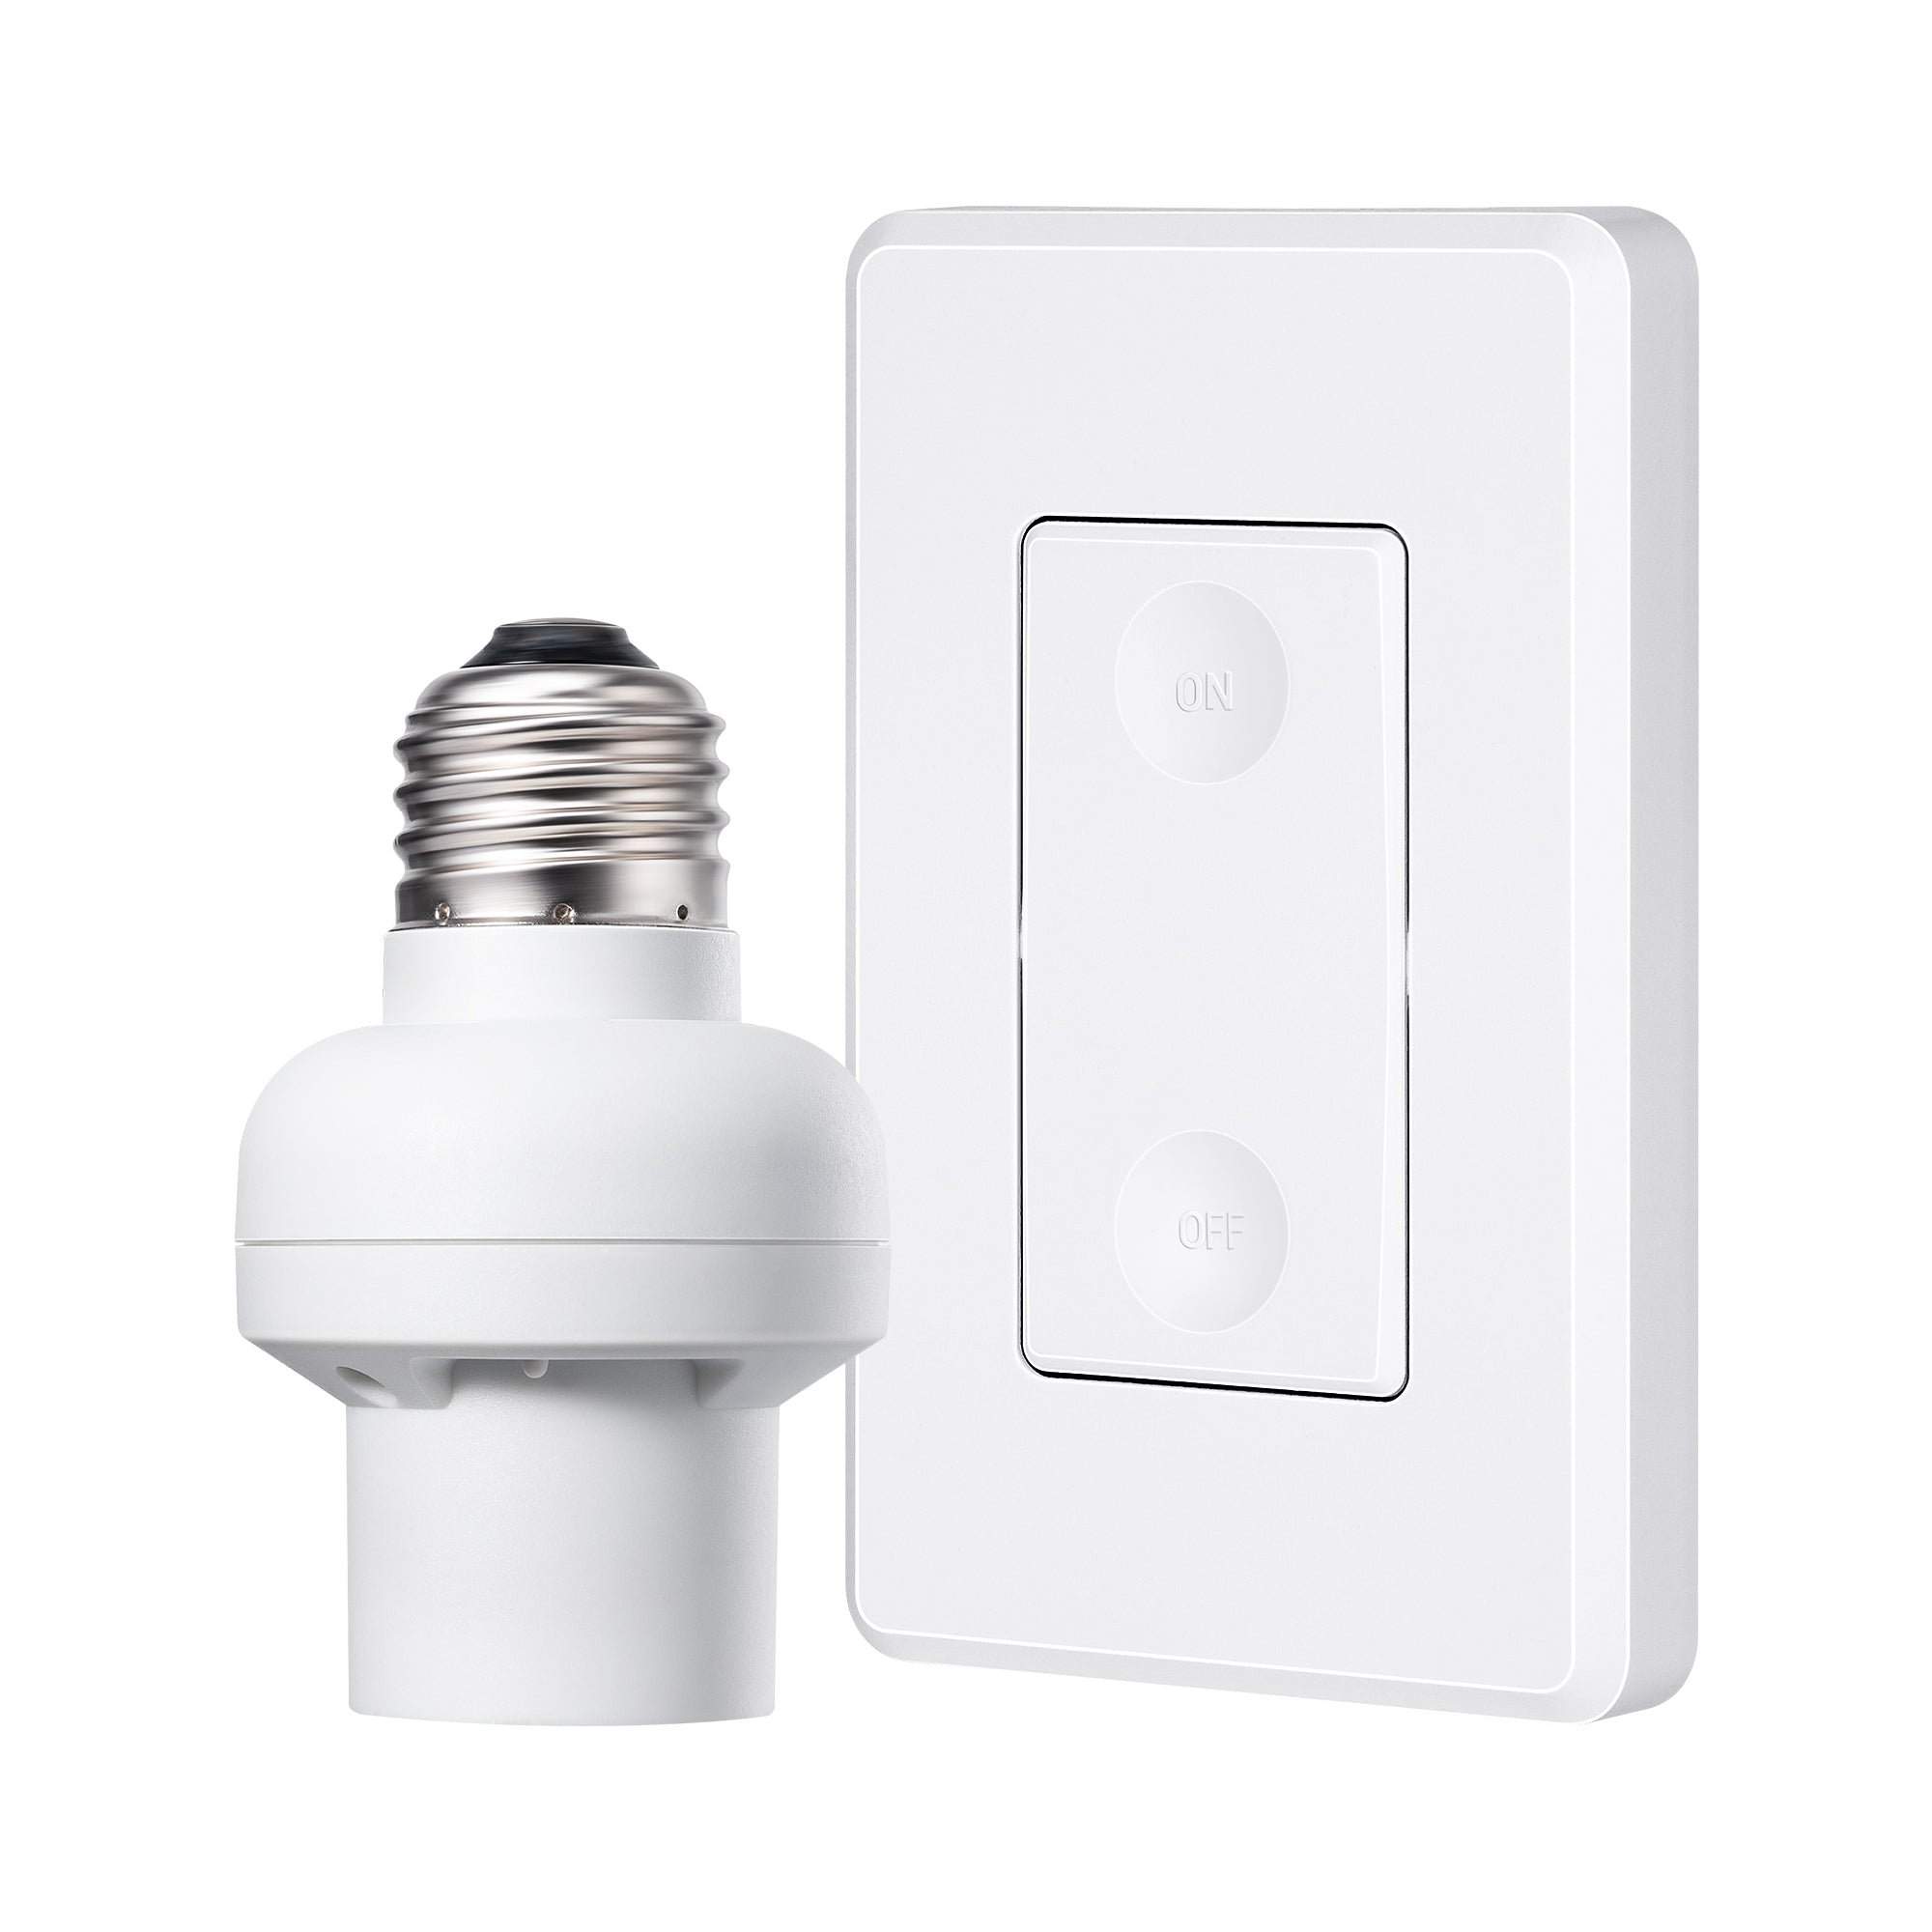 DEWENWILS Remote Control Light Socket, Wireless Remote Light Bulbs